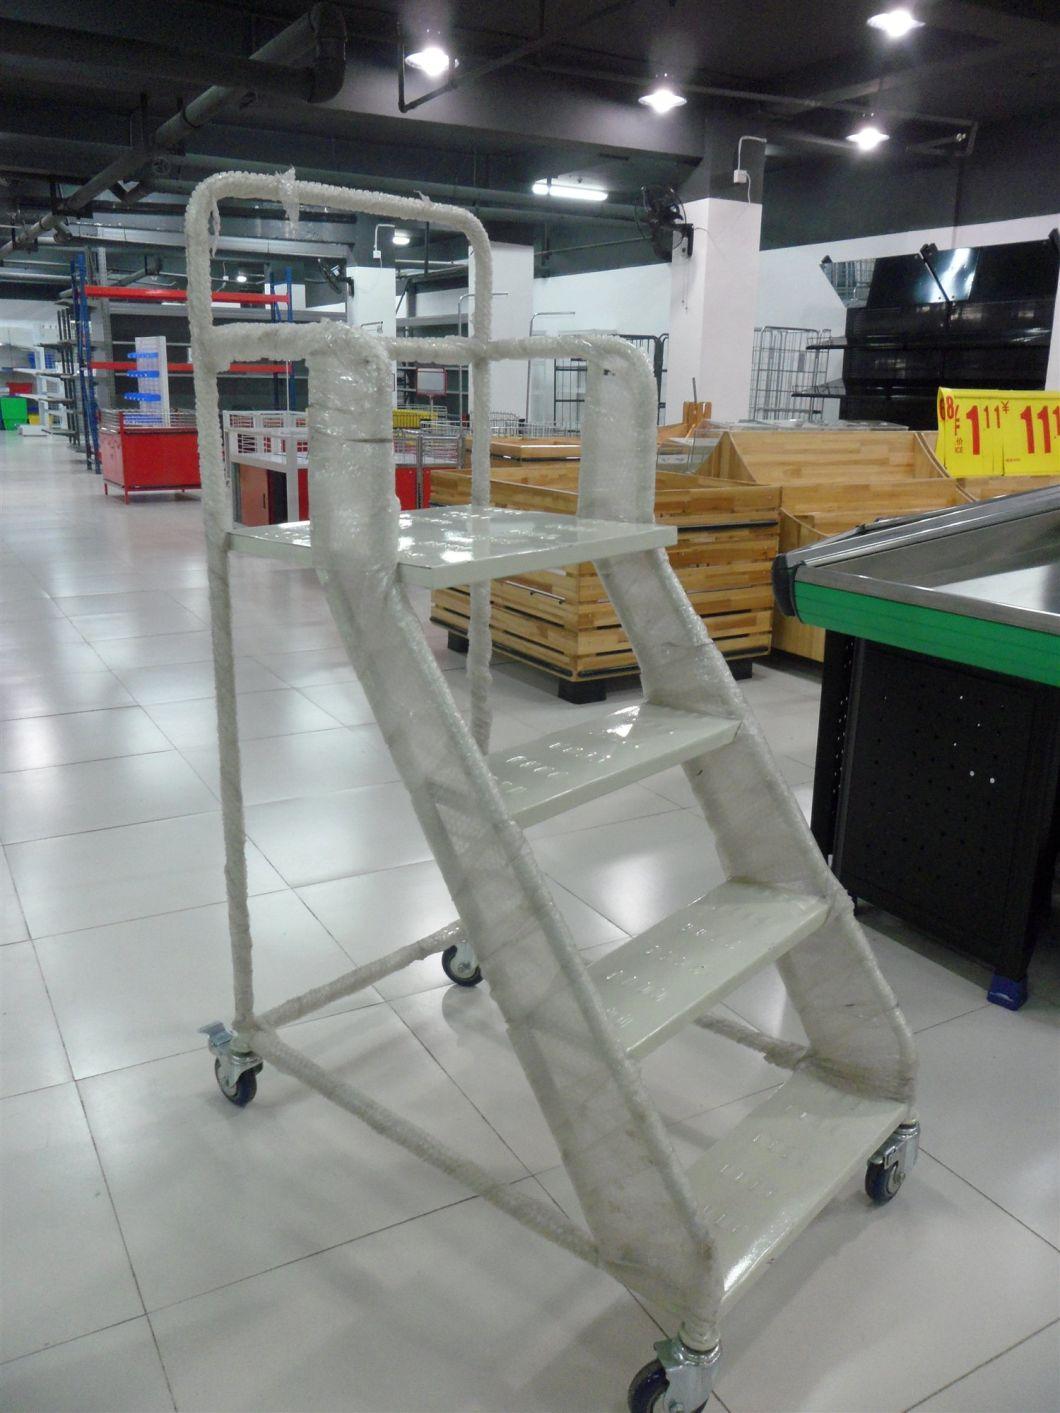 Best Sales Warehouse Stainless Steel Rolling Mobile Platform Ladder Truck